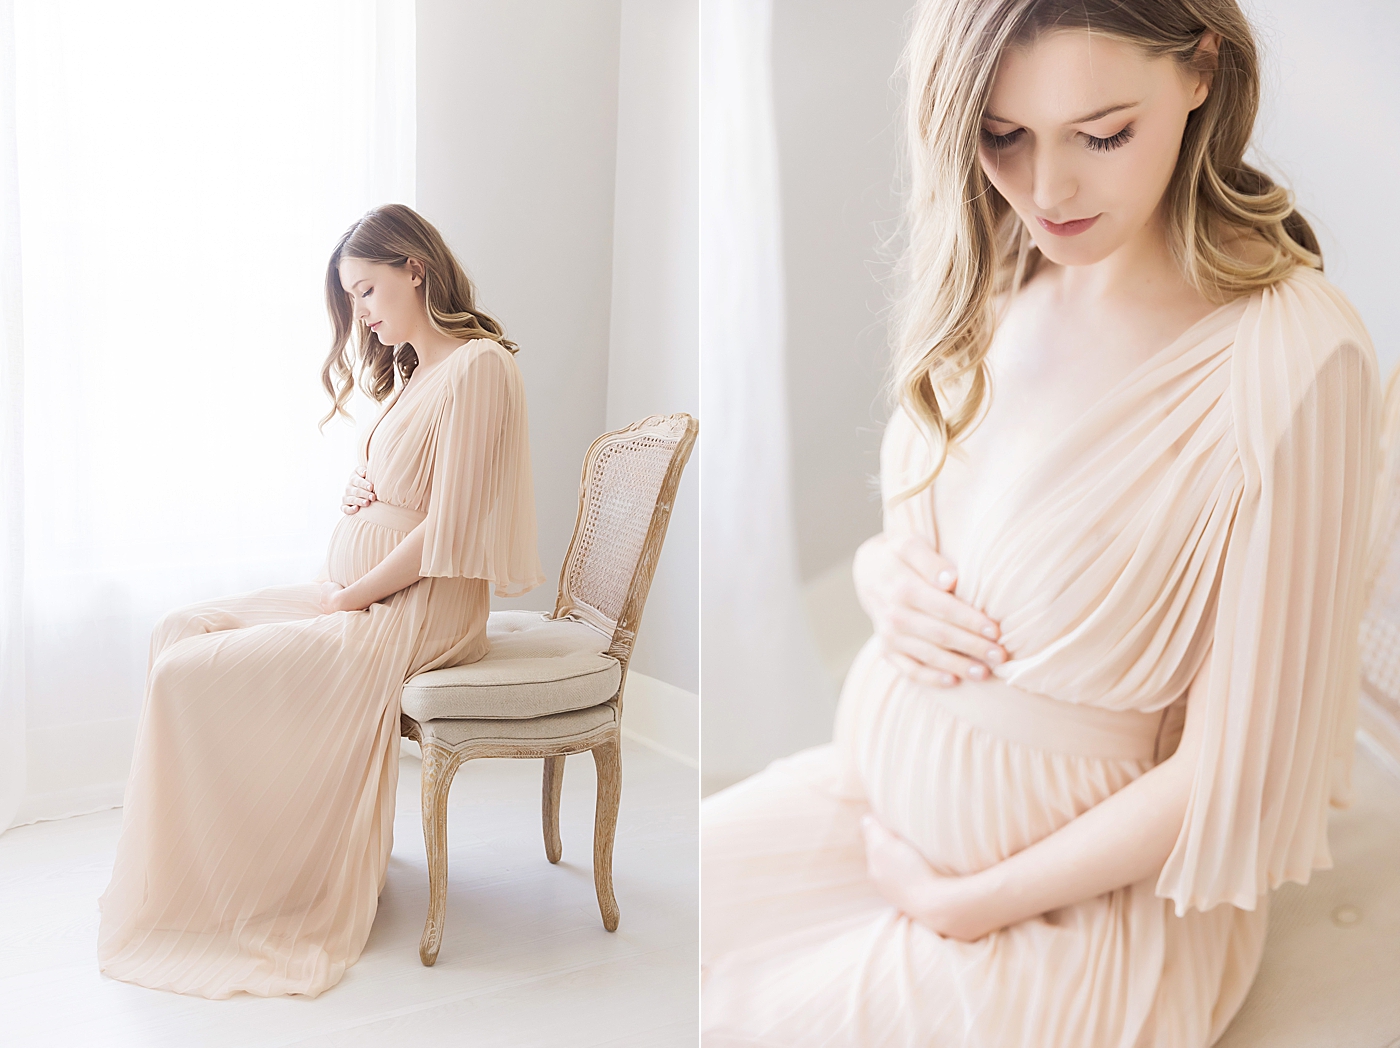 Pregnancy photos in Houston studio. Photo by Fresh Light Photography.